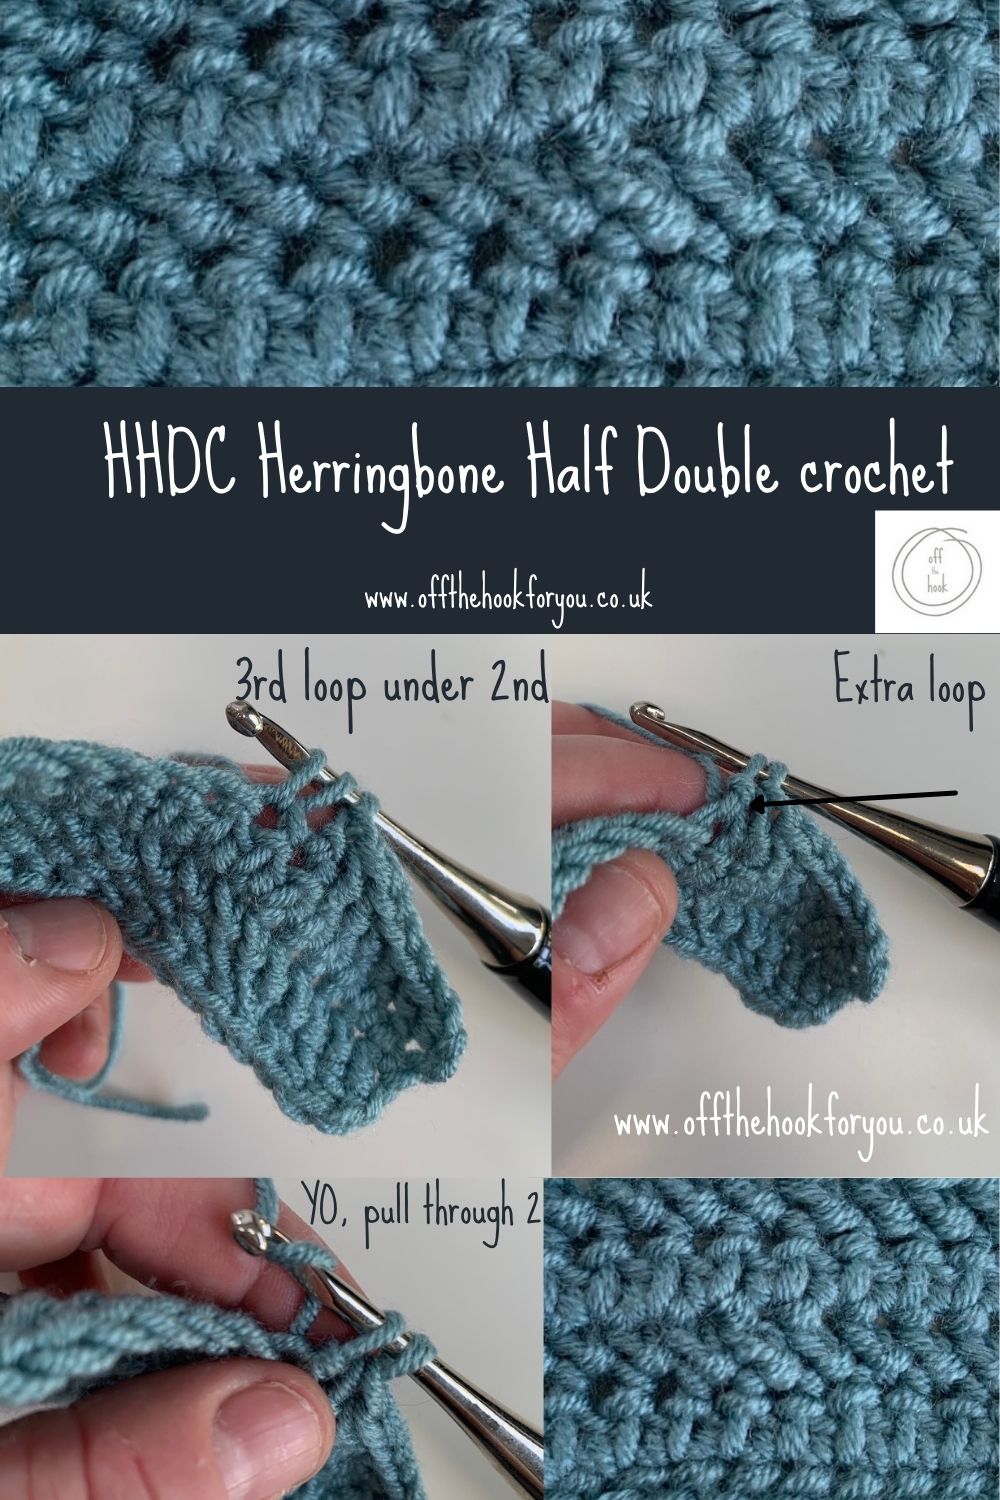 How to HHDC herringbone